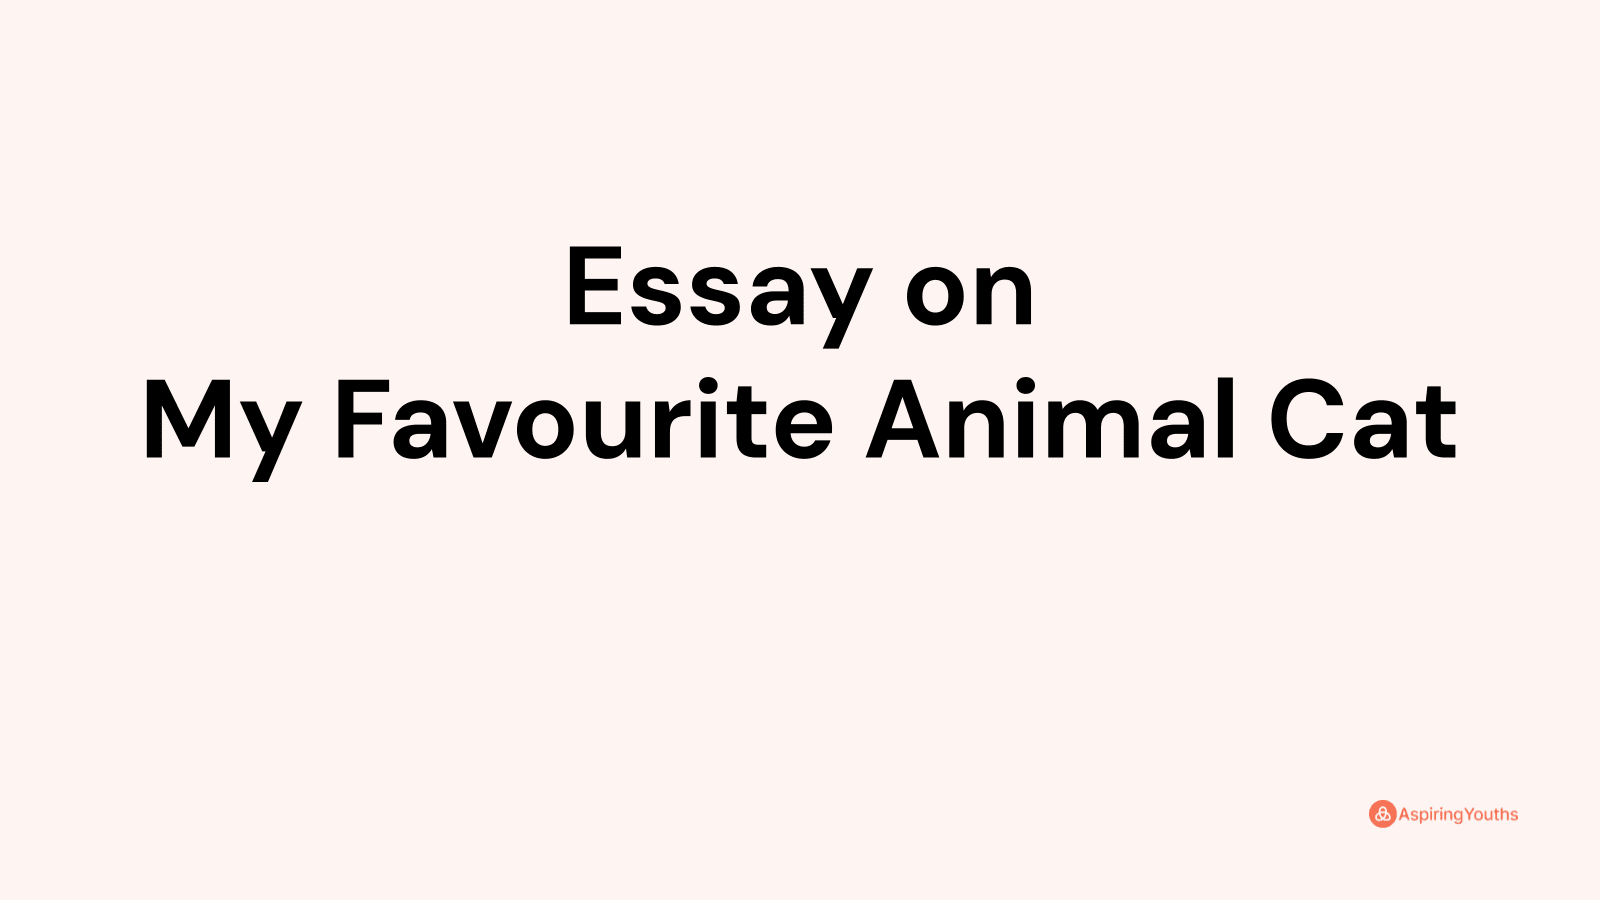 Essay on My Favourite Animal Cat